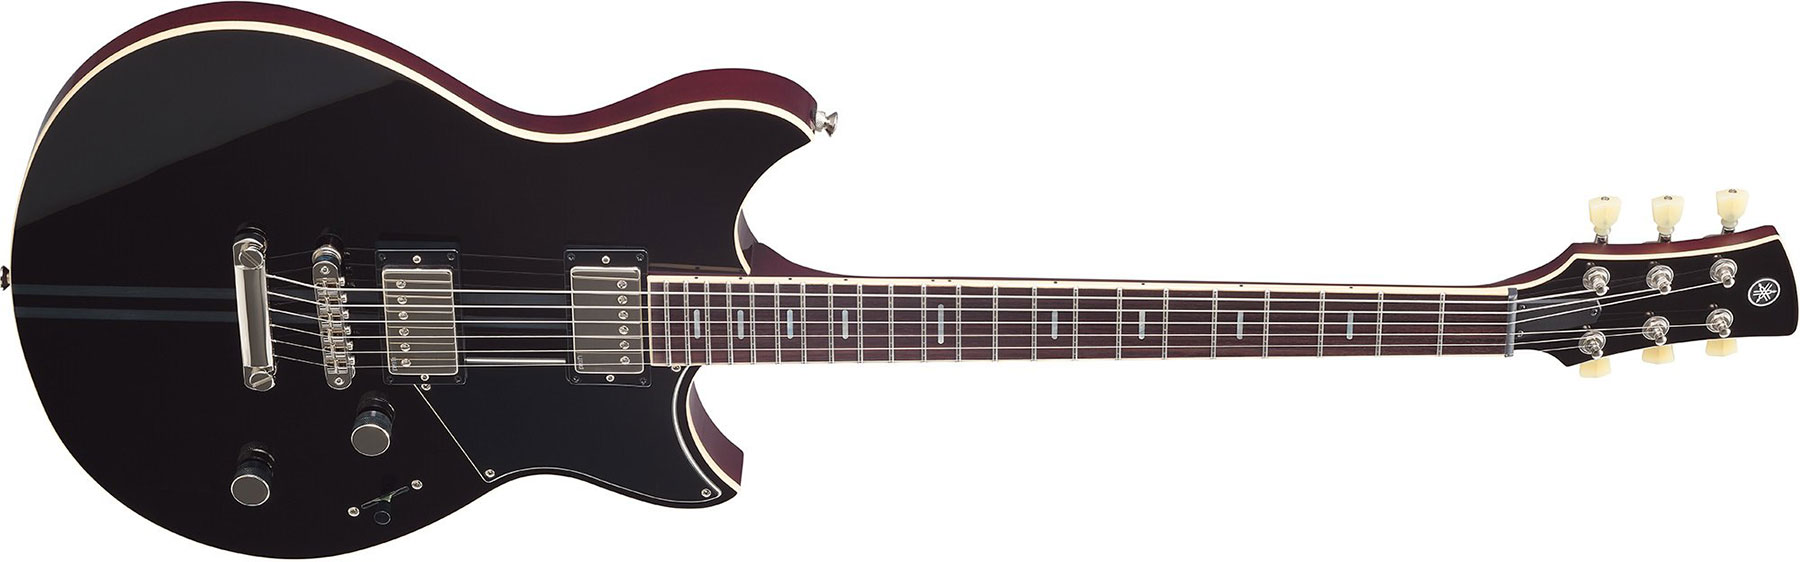 Yamaha Rss20 Revstar Standard Hh Ht Rw - Black - Double cut electric guitar - Variation 1